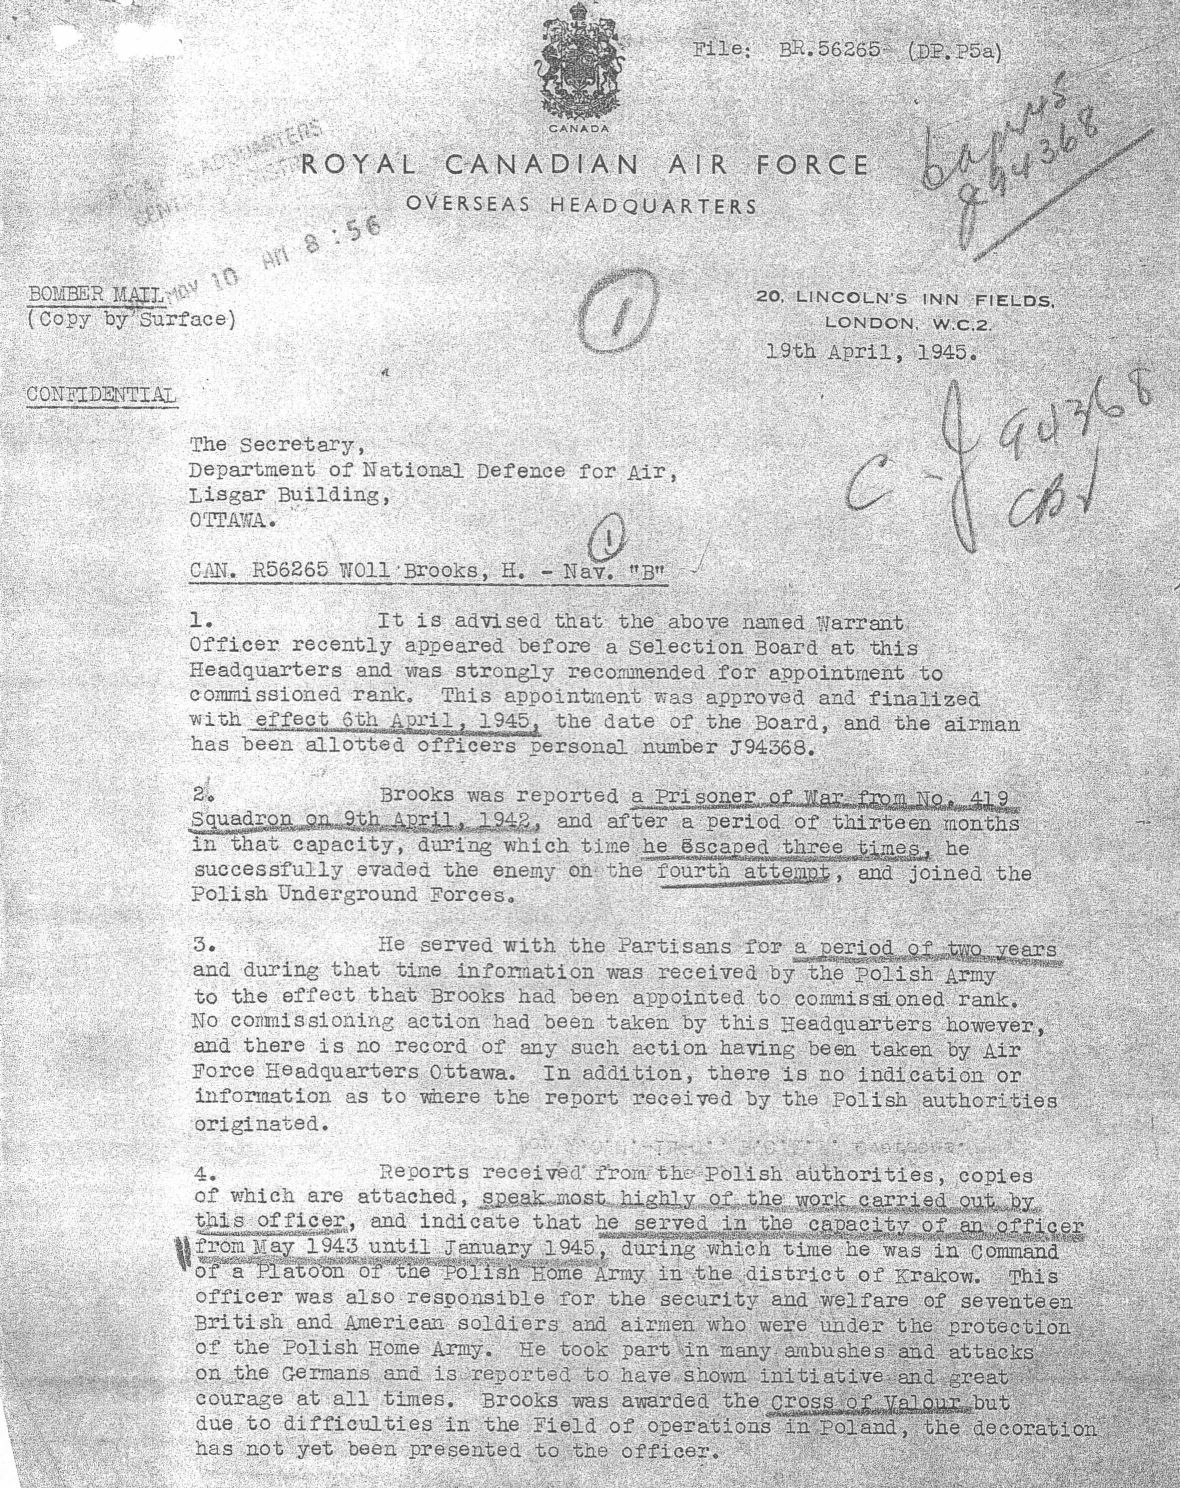 Image Letter 19 April 1945